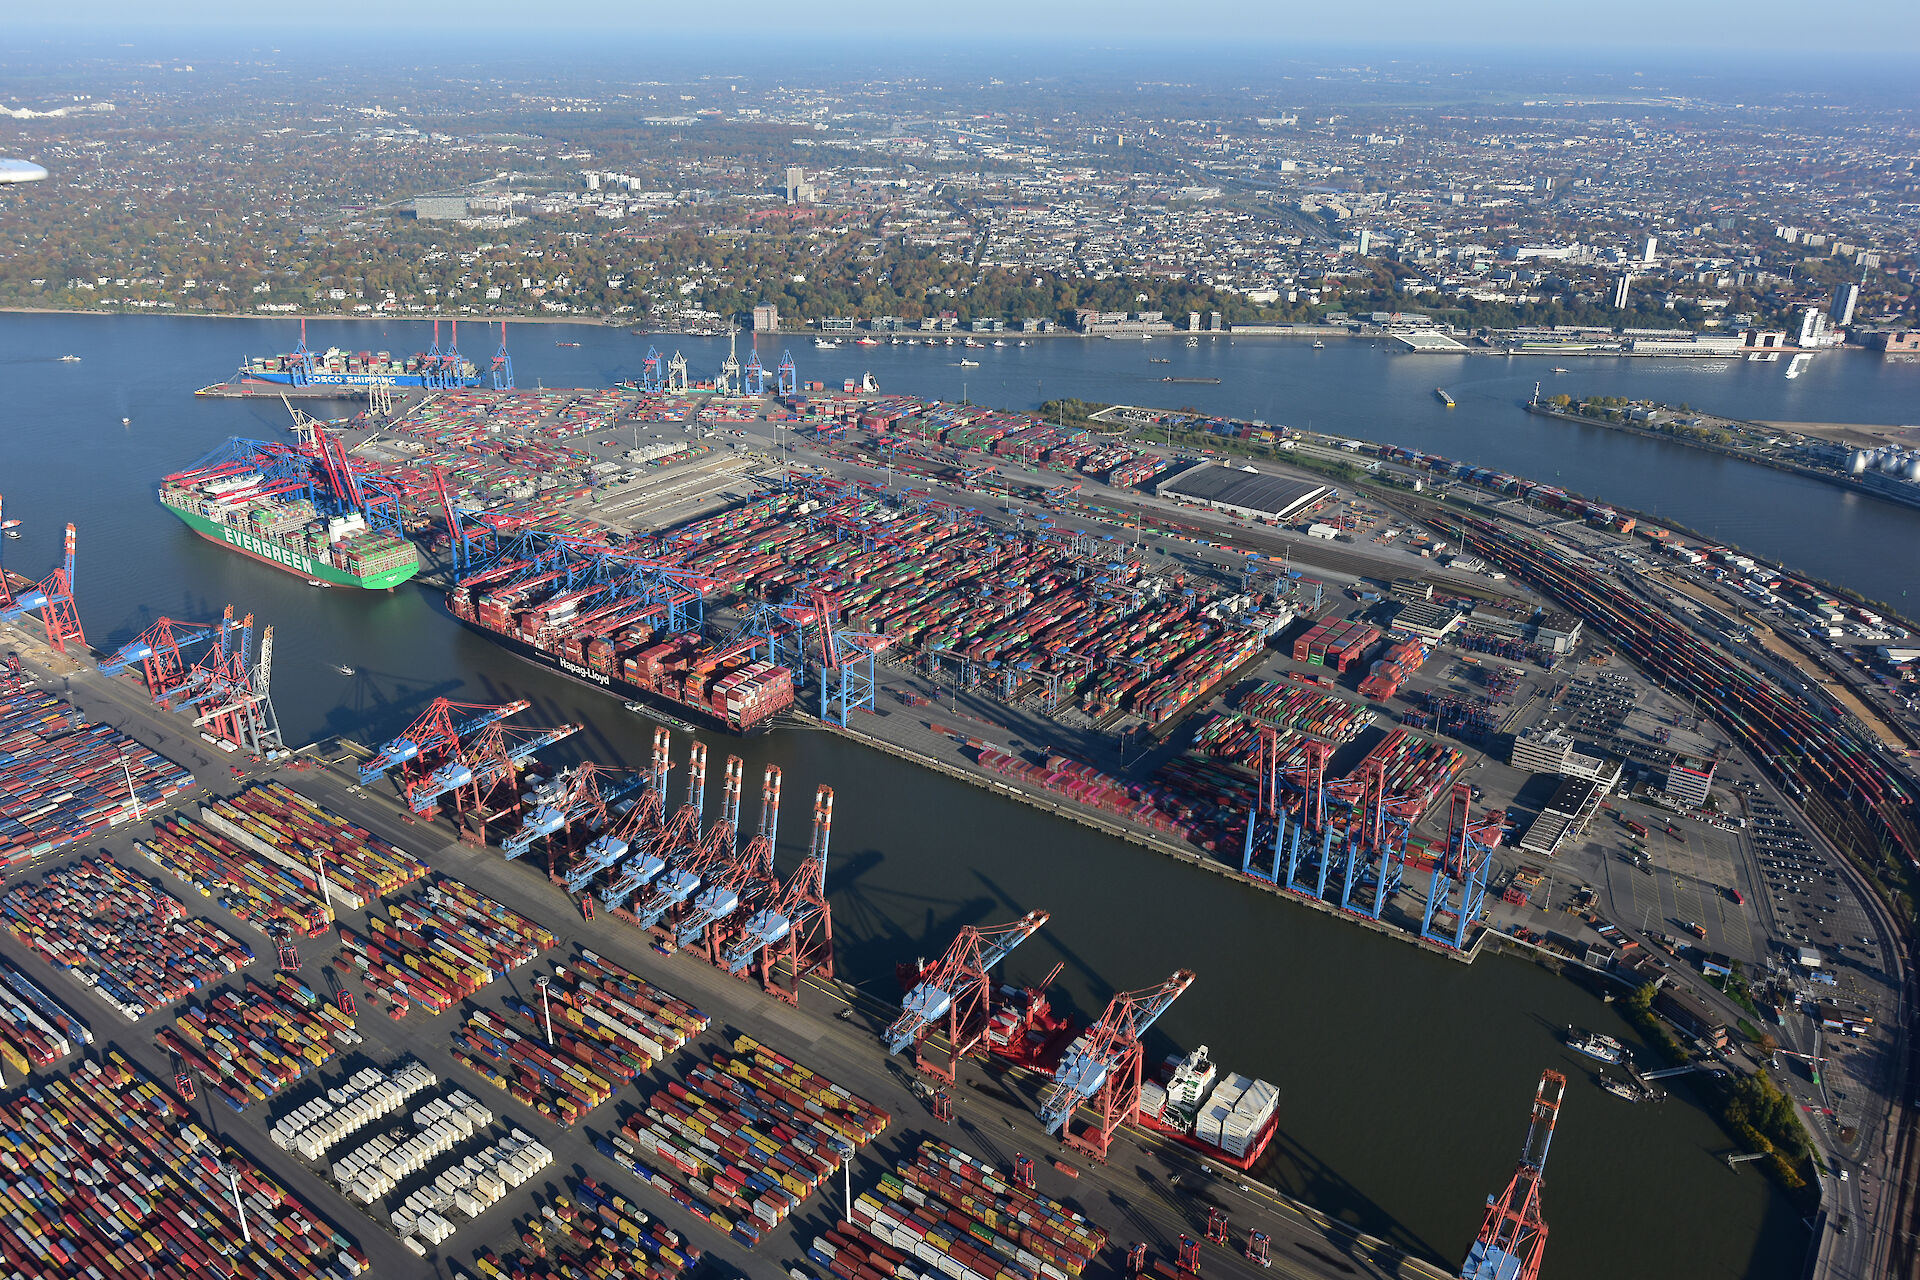 Port of Hamburg | Port of Hamburg boosts container throughput market share